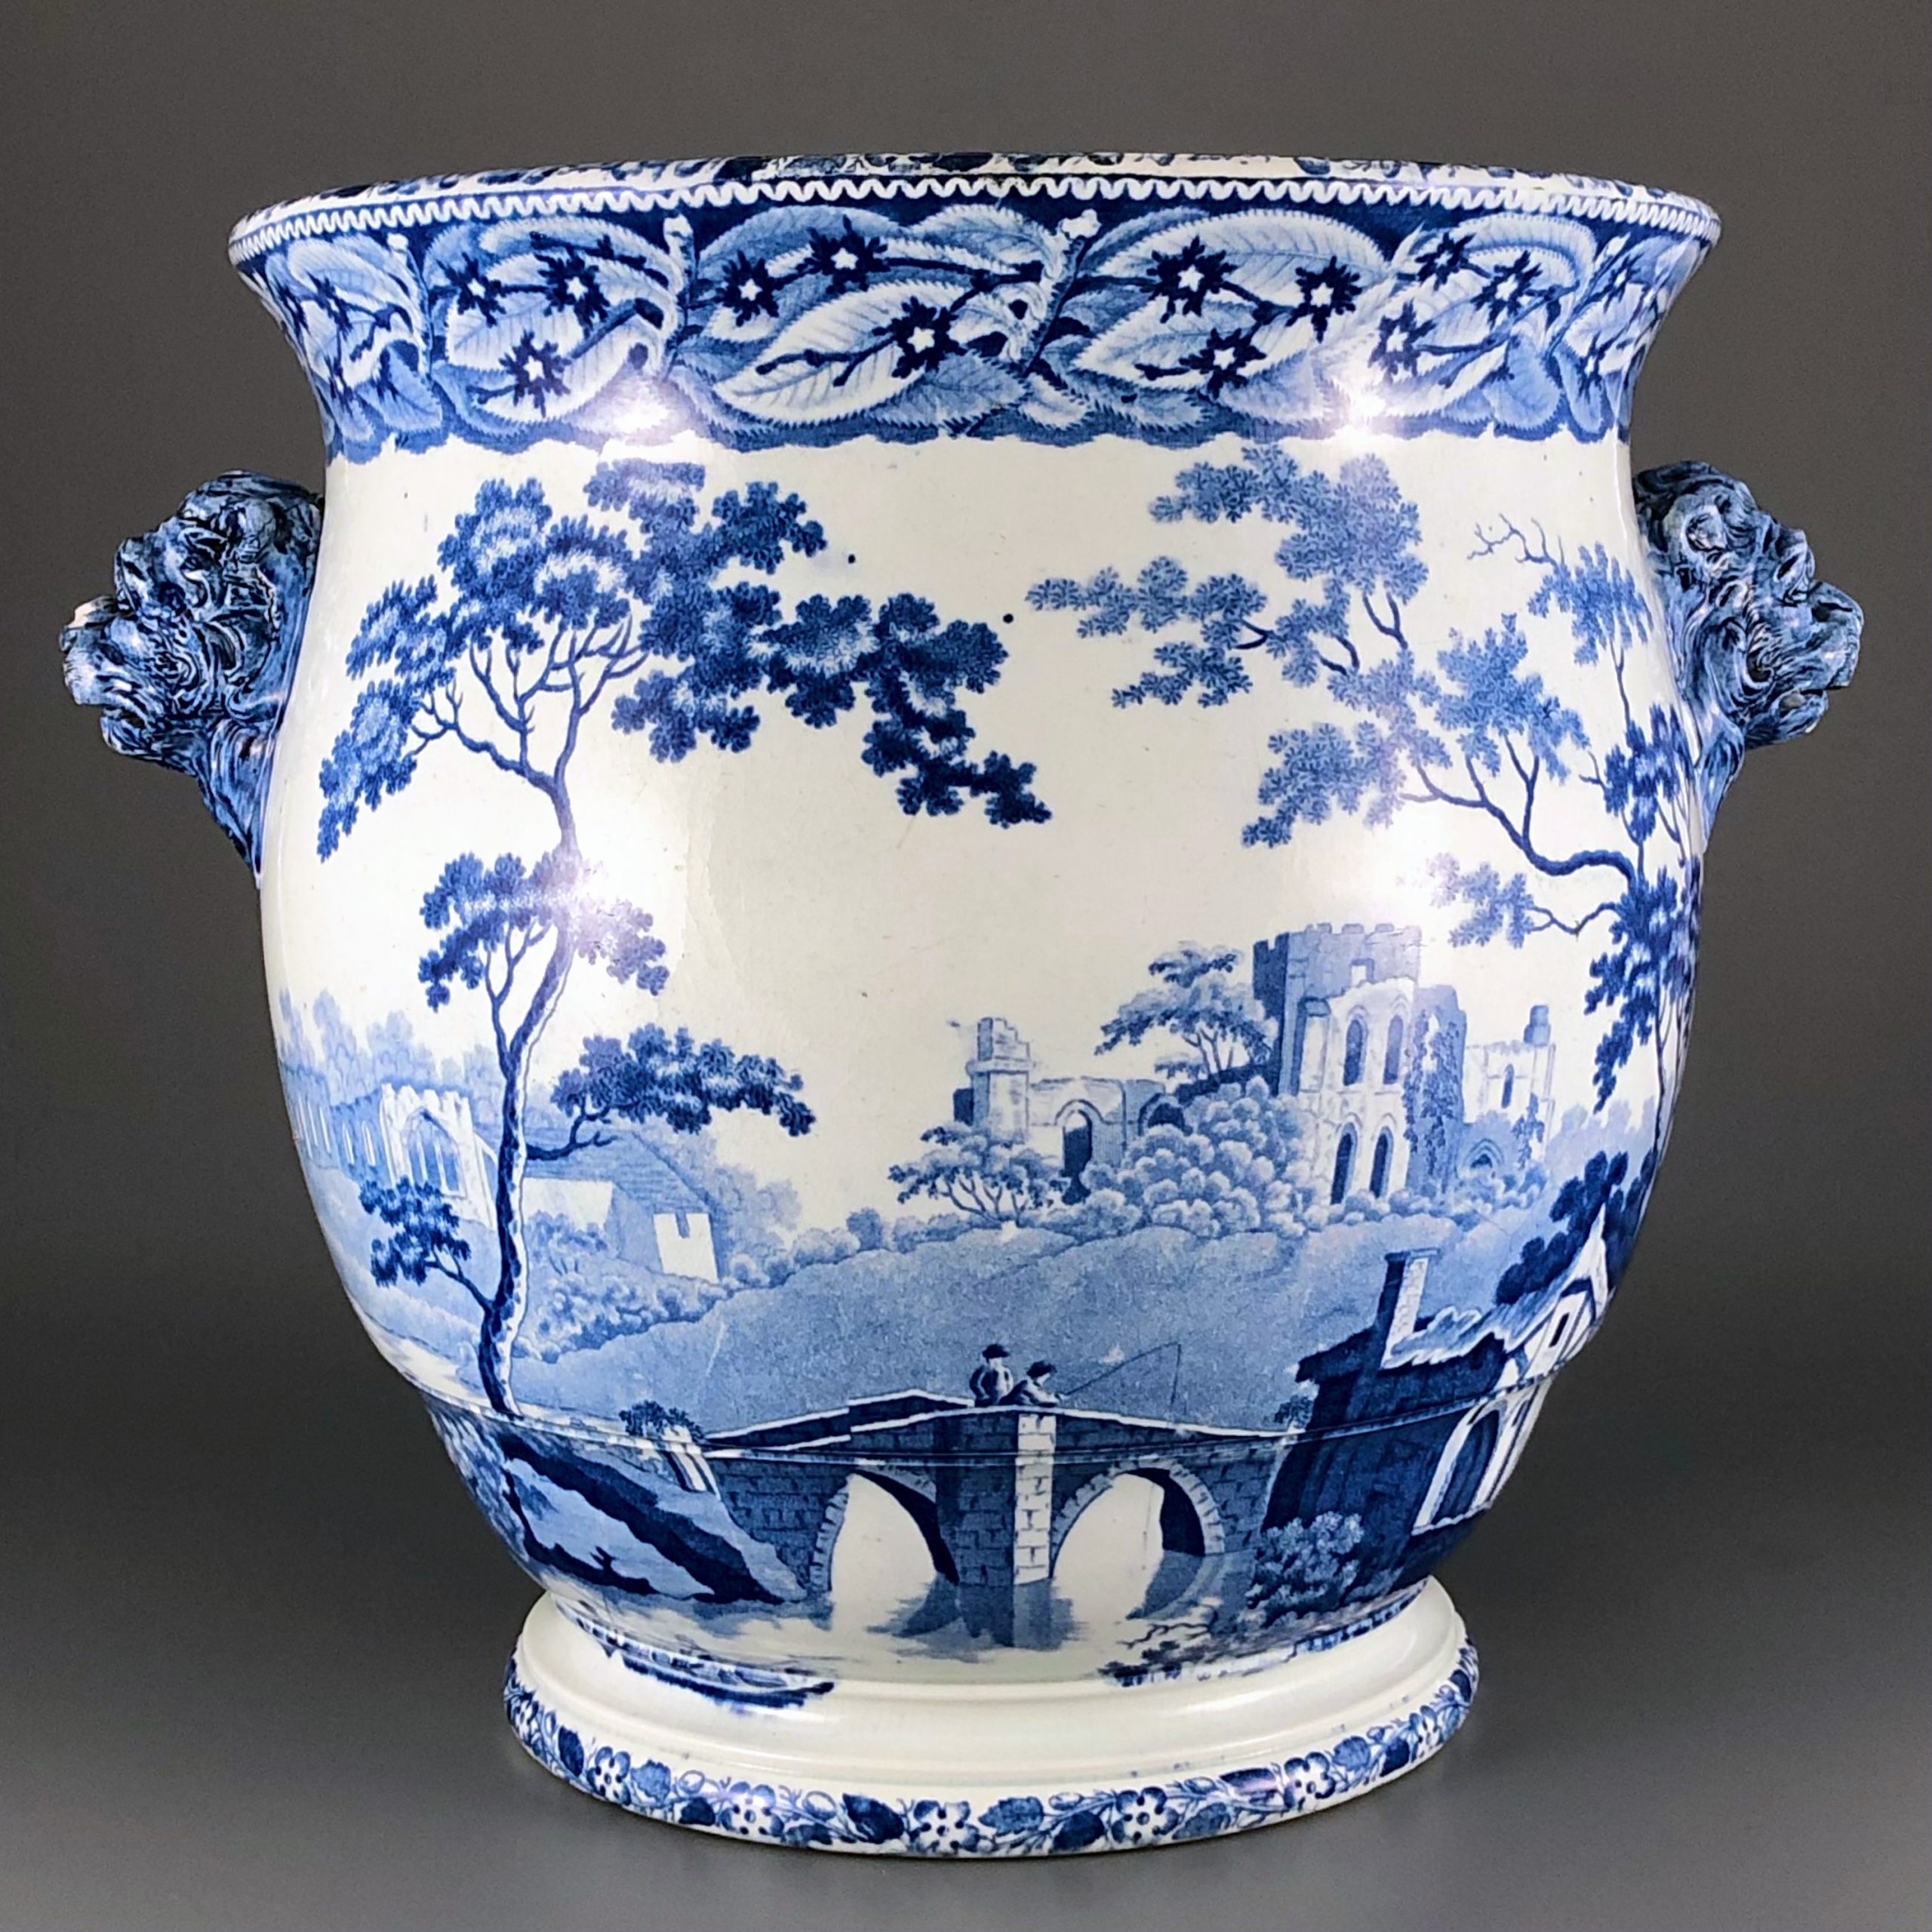 19th-century English pottery